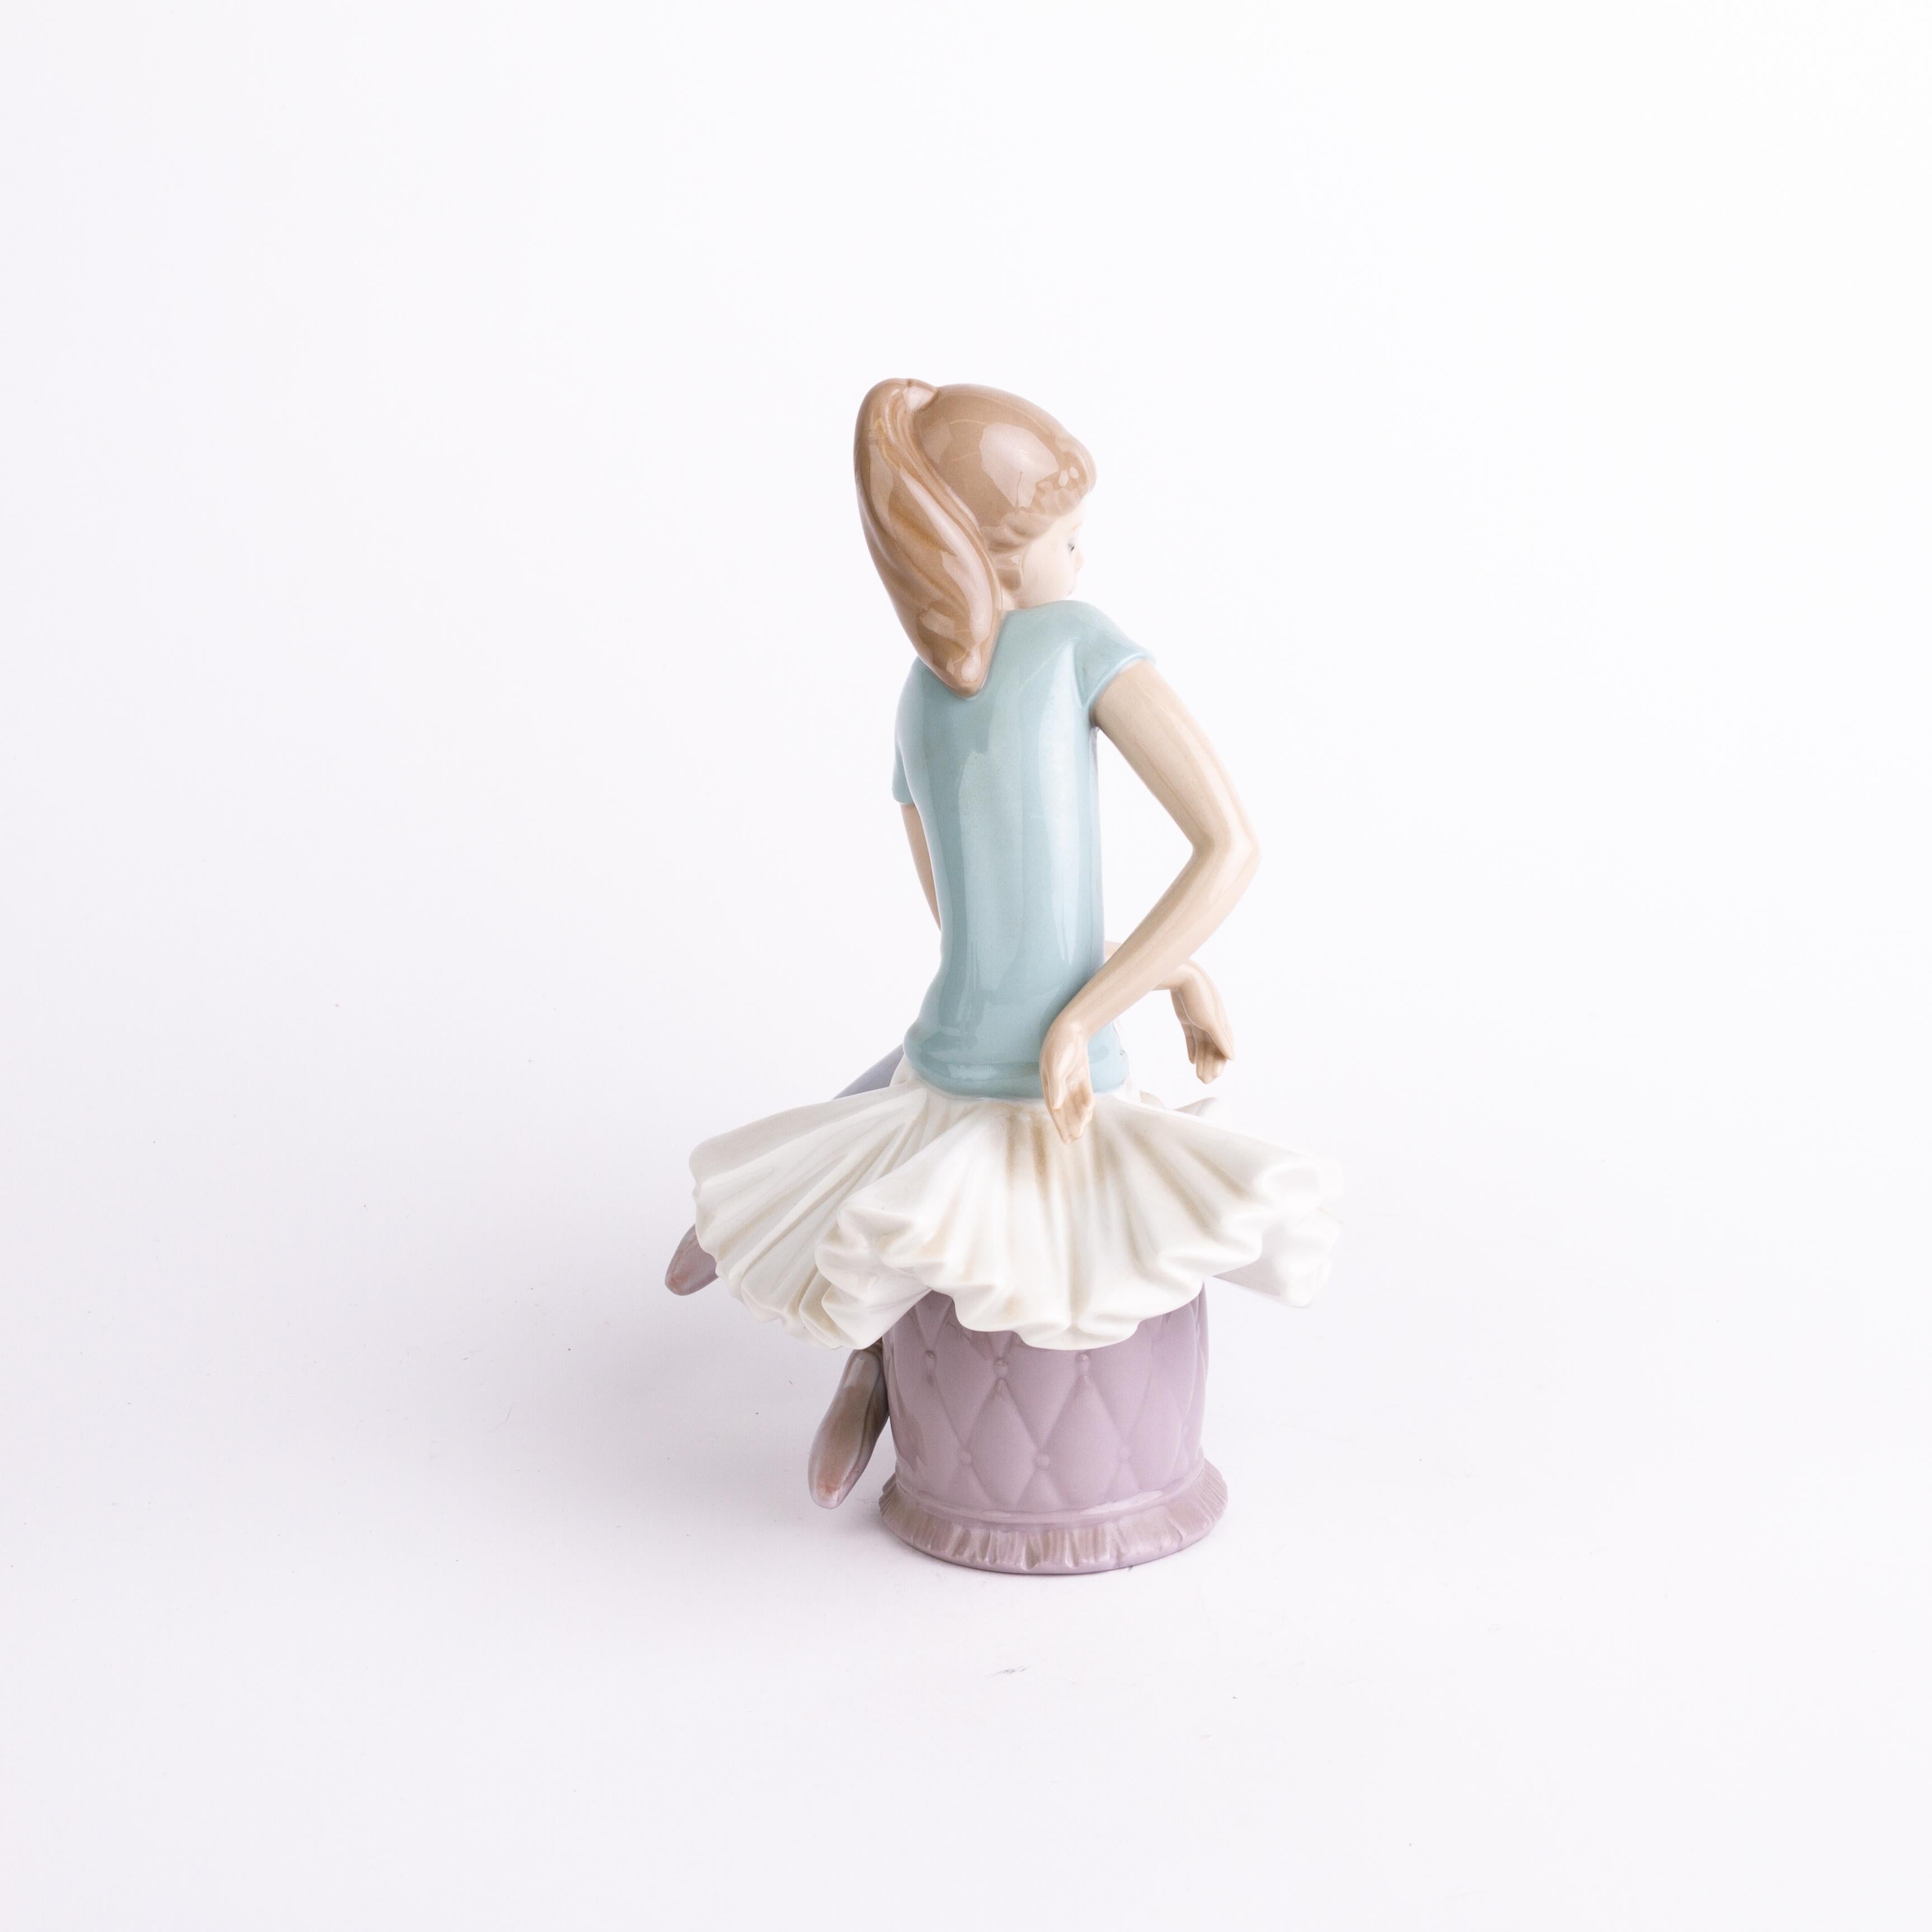 Spanish Fine Porcelain Lladro Ballerina Sculpture Figure 
Good condition
Free international shipping.